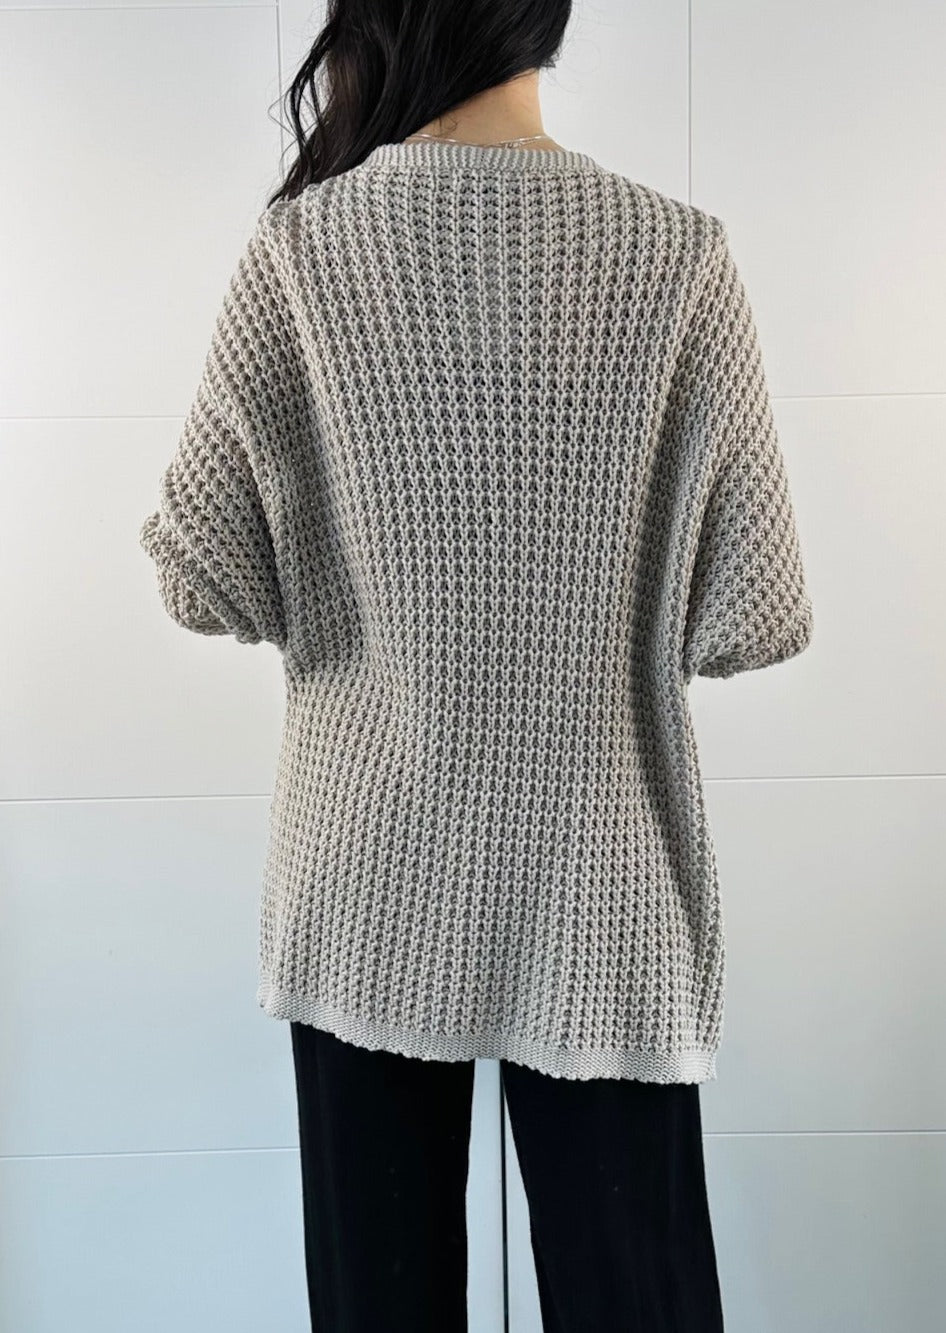 Steel Grey Knit Cardigan Sweater